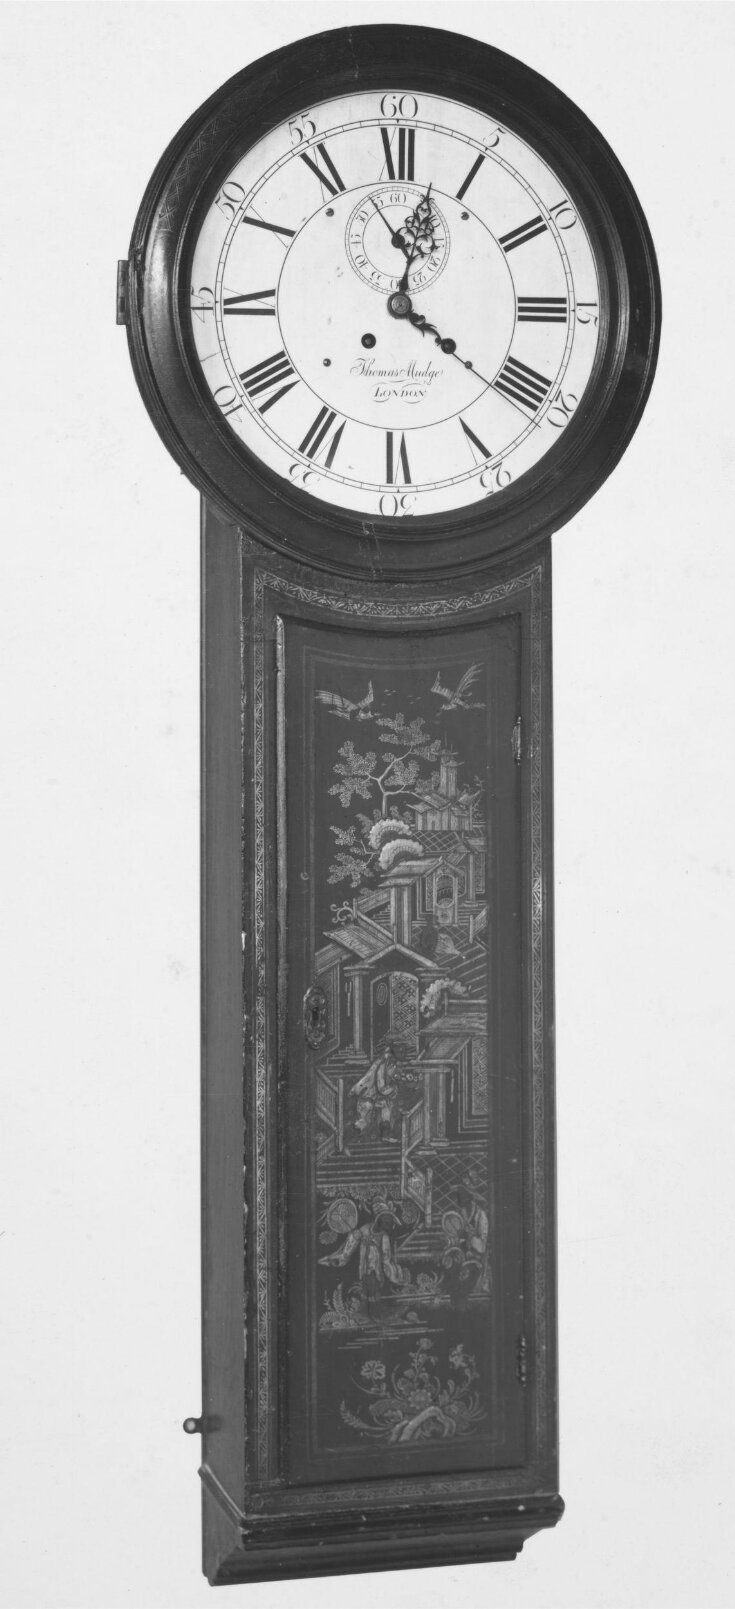 Act of Parliament Clock top image